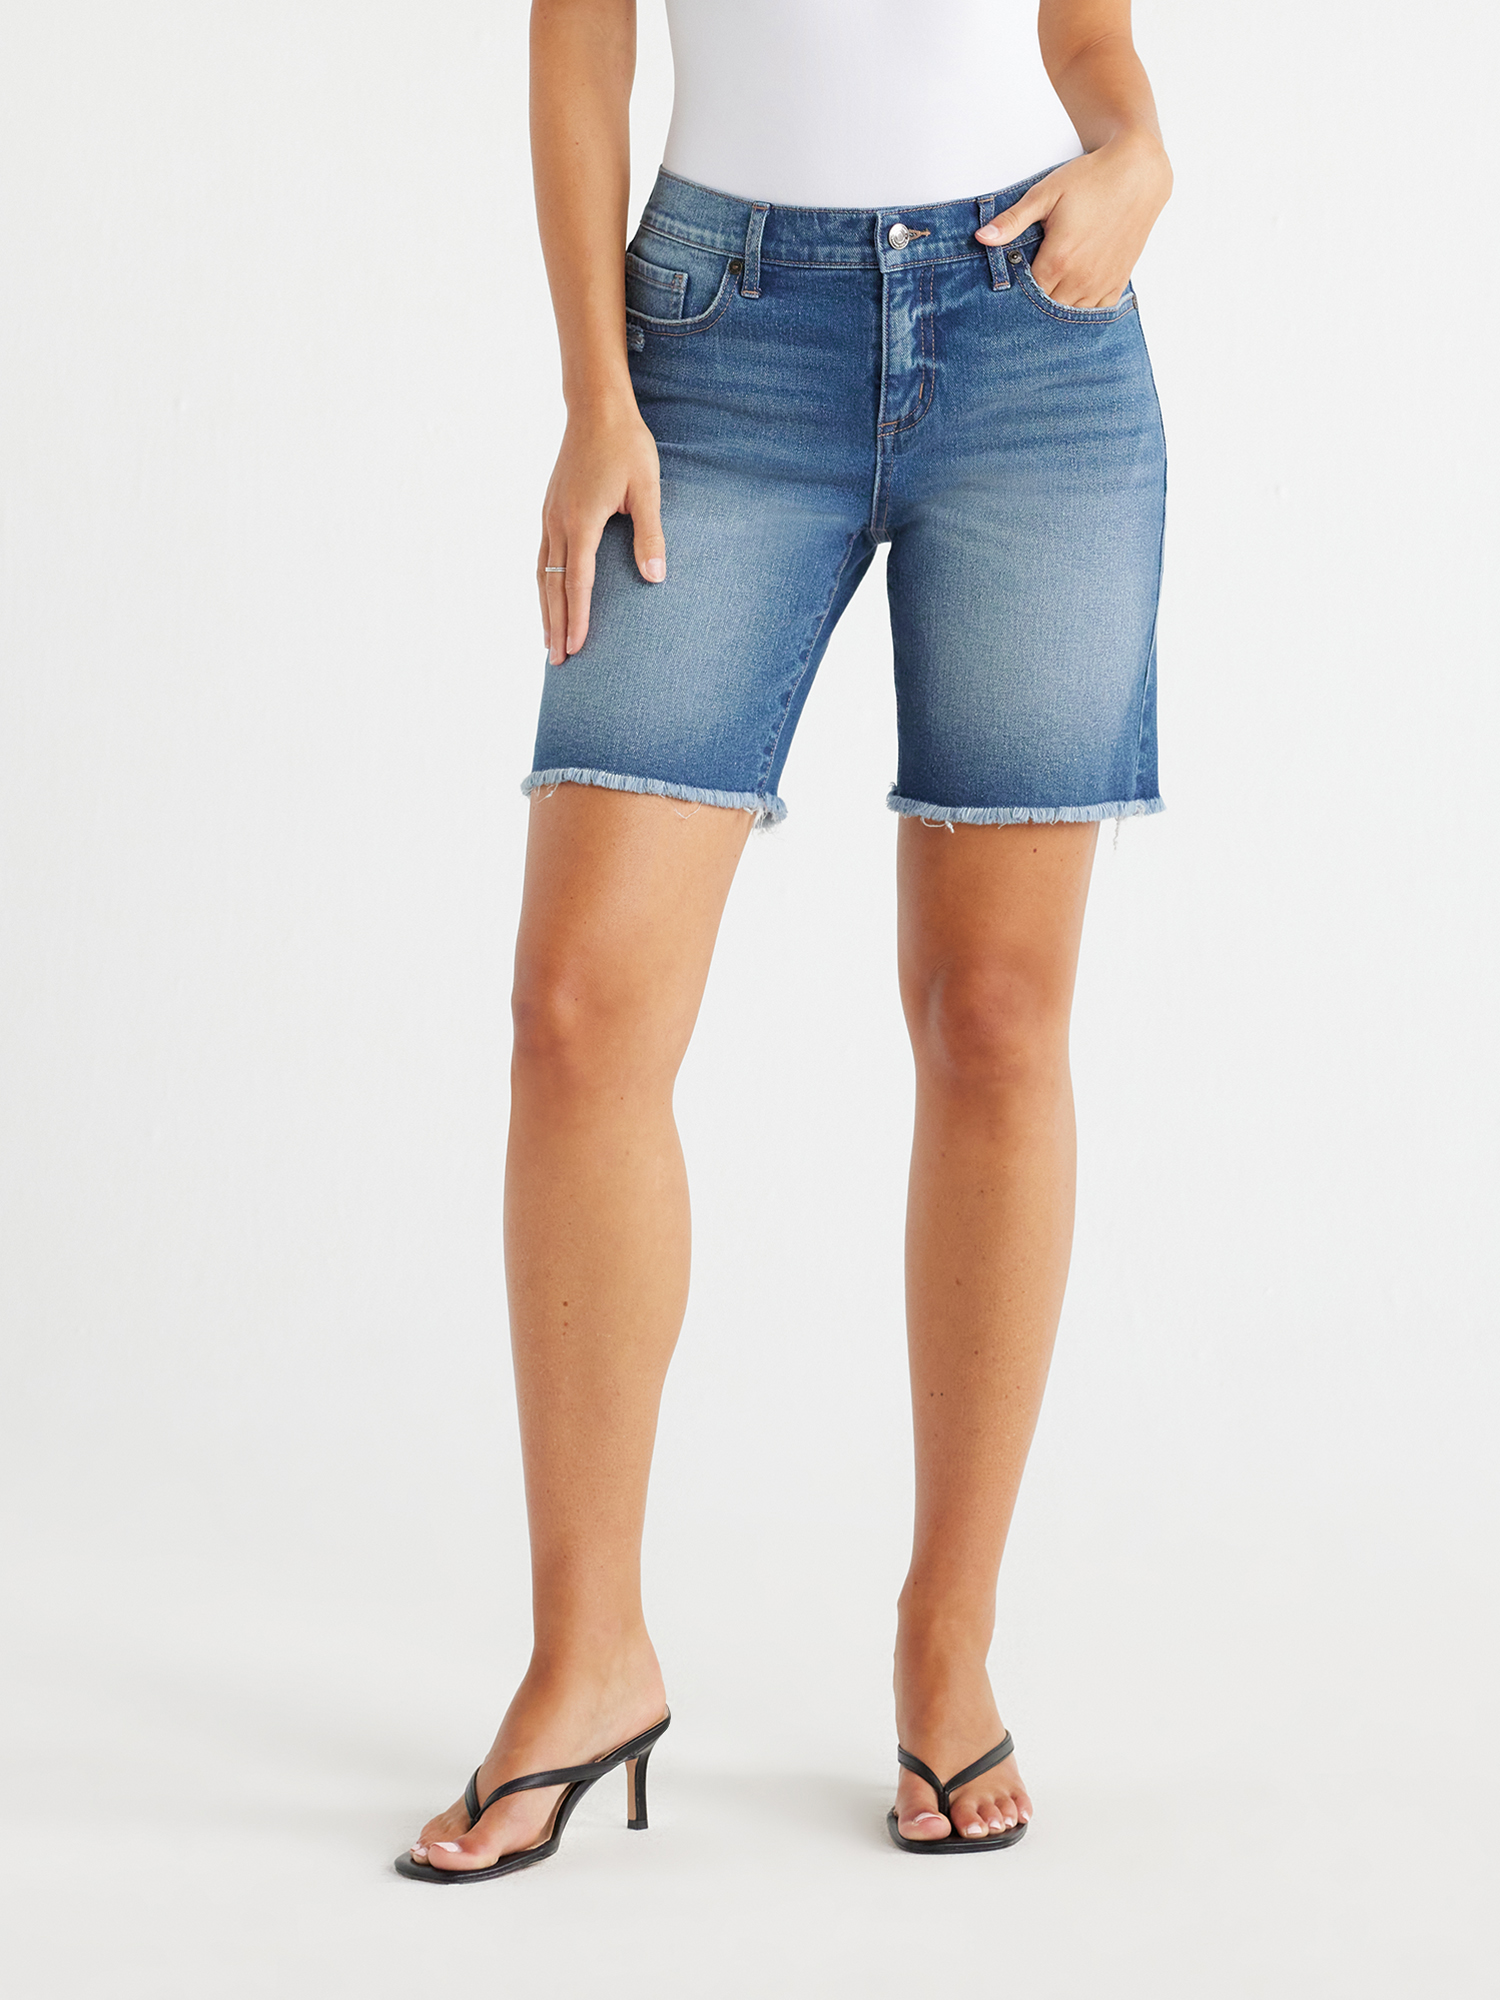 Sofia Jeans Women's Gabriella Bermuda Mid Rise Distressed Shorts, 8" Inseam, Sizes 2-20